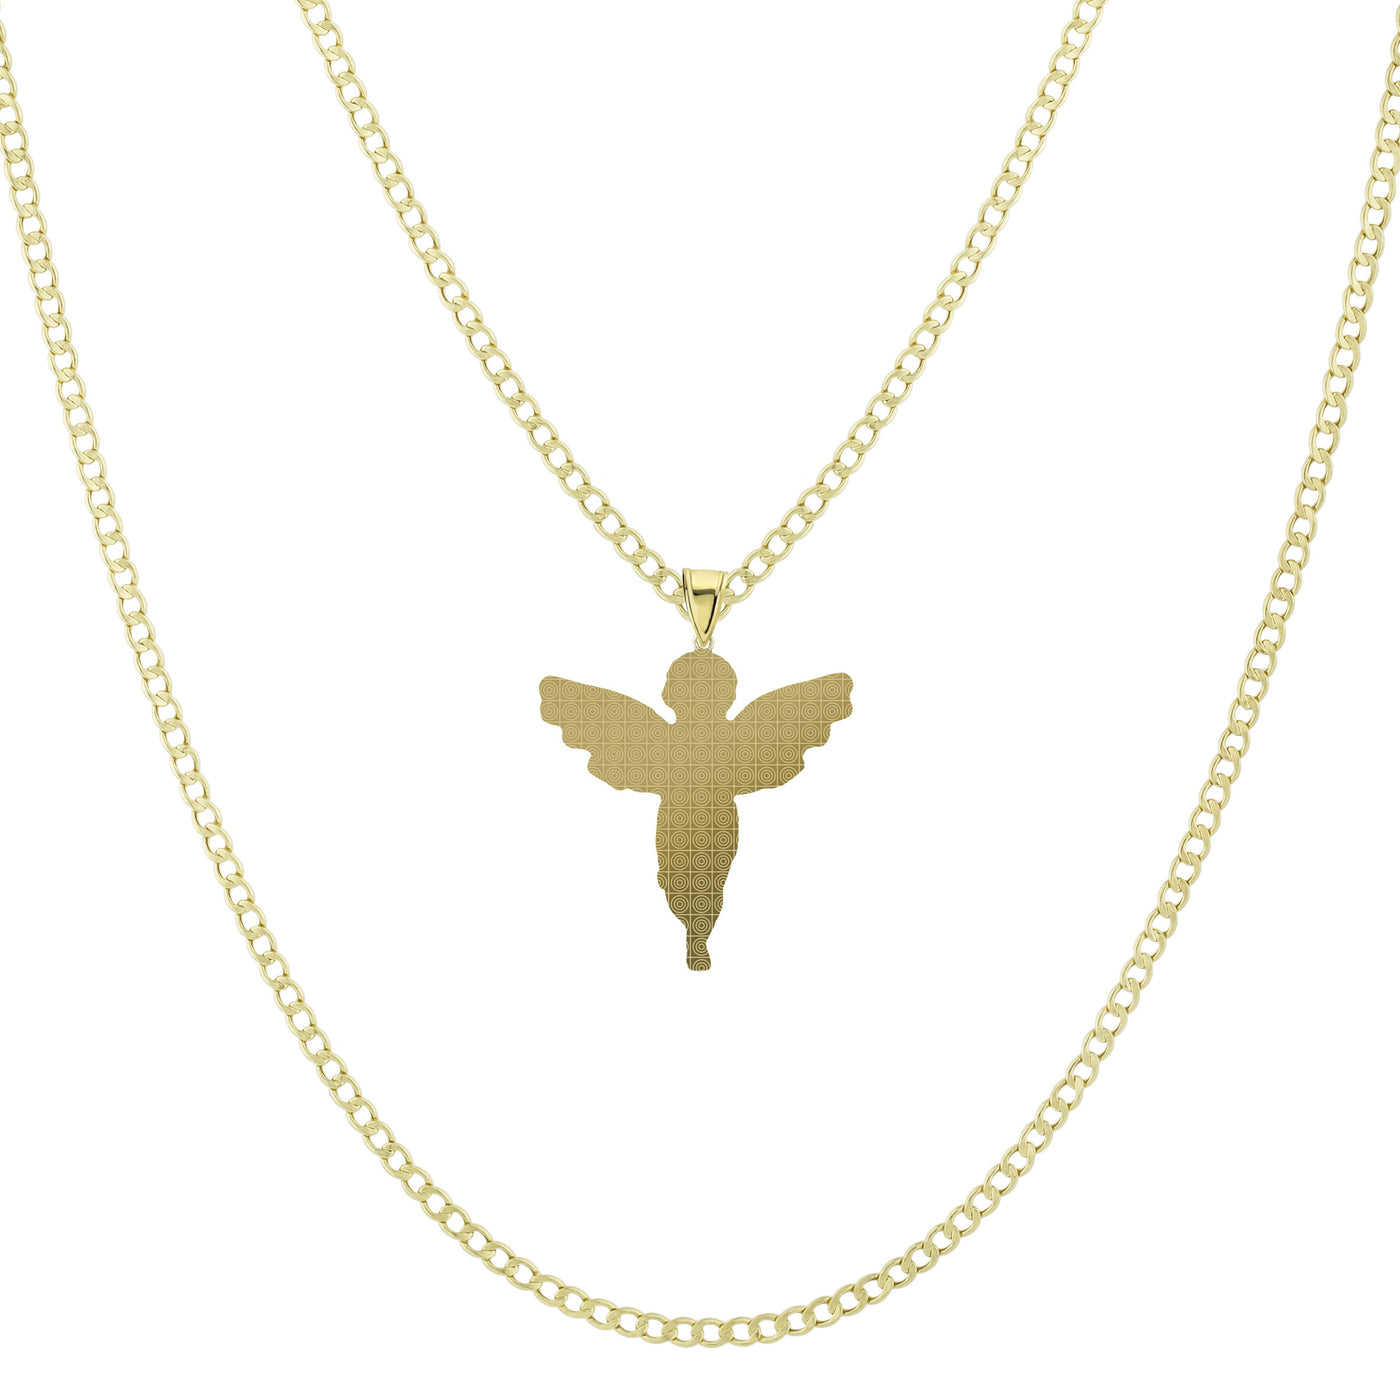 1 1/4" Praying Angel Pendant & Chain Necklace Set 14K Yellow White Gold